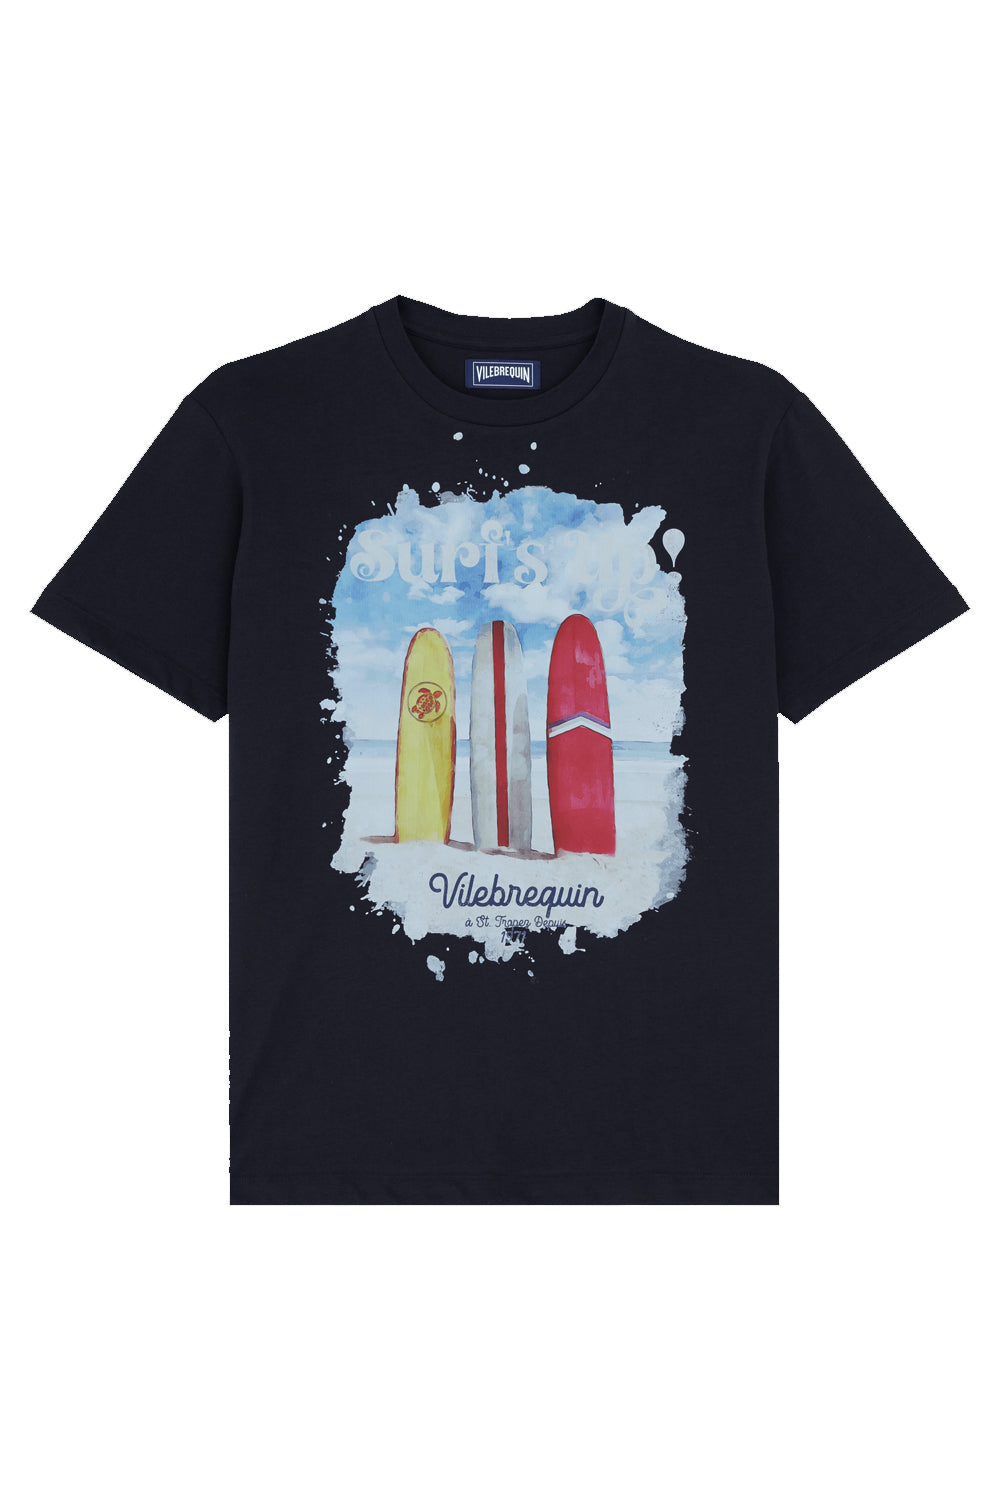 VILEBREQUIN T-shirt Surf's Up